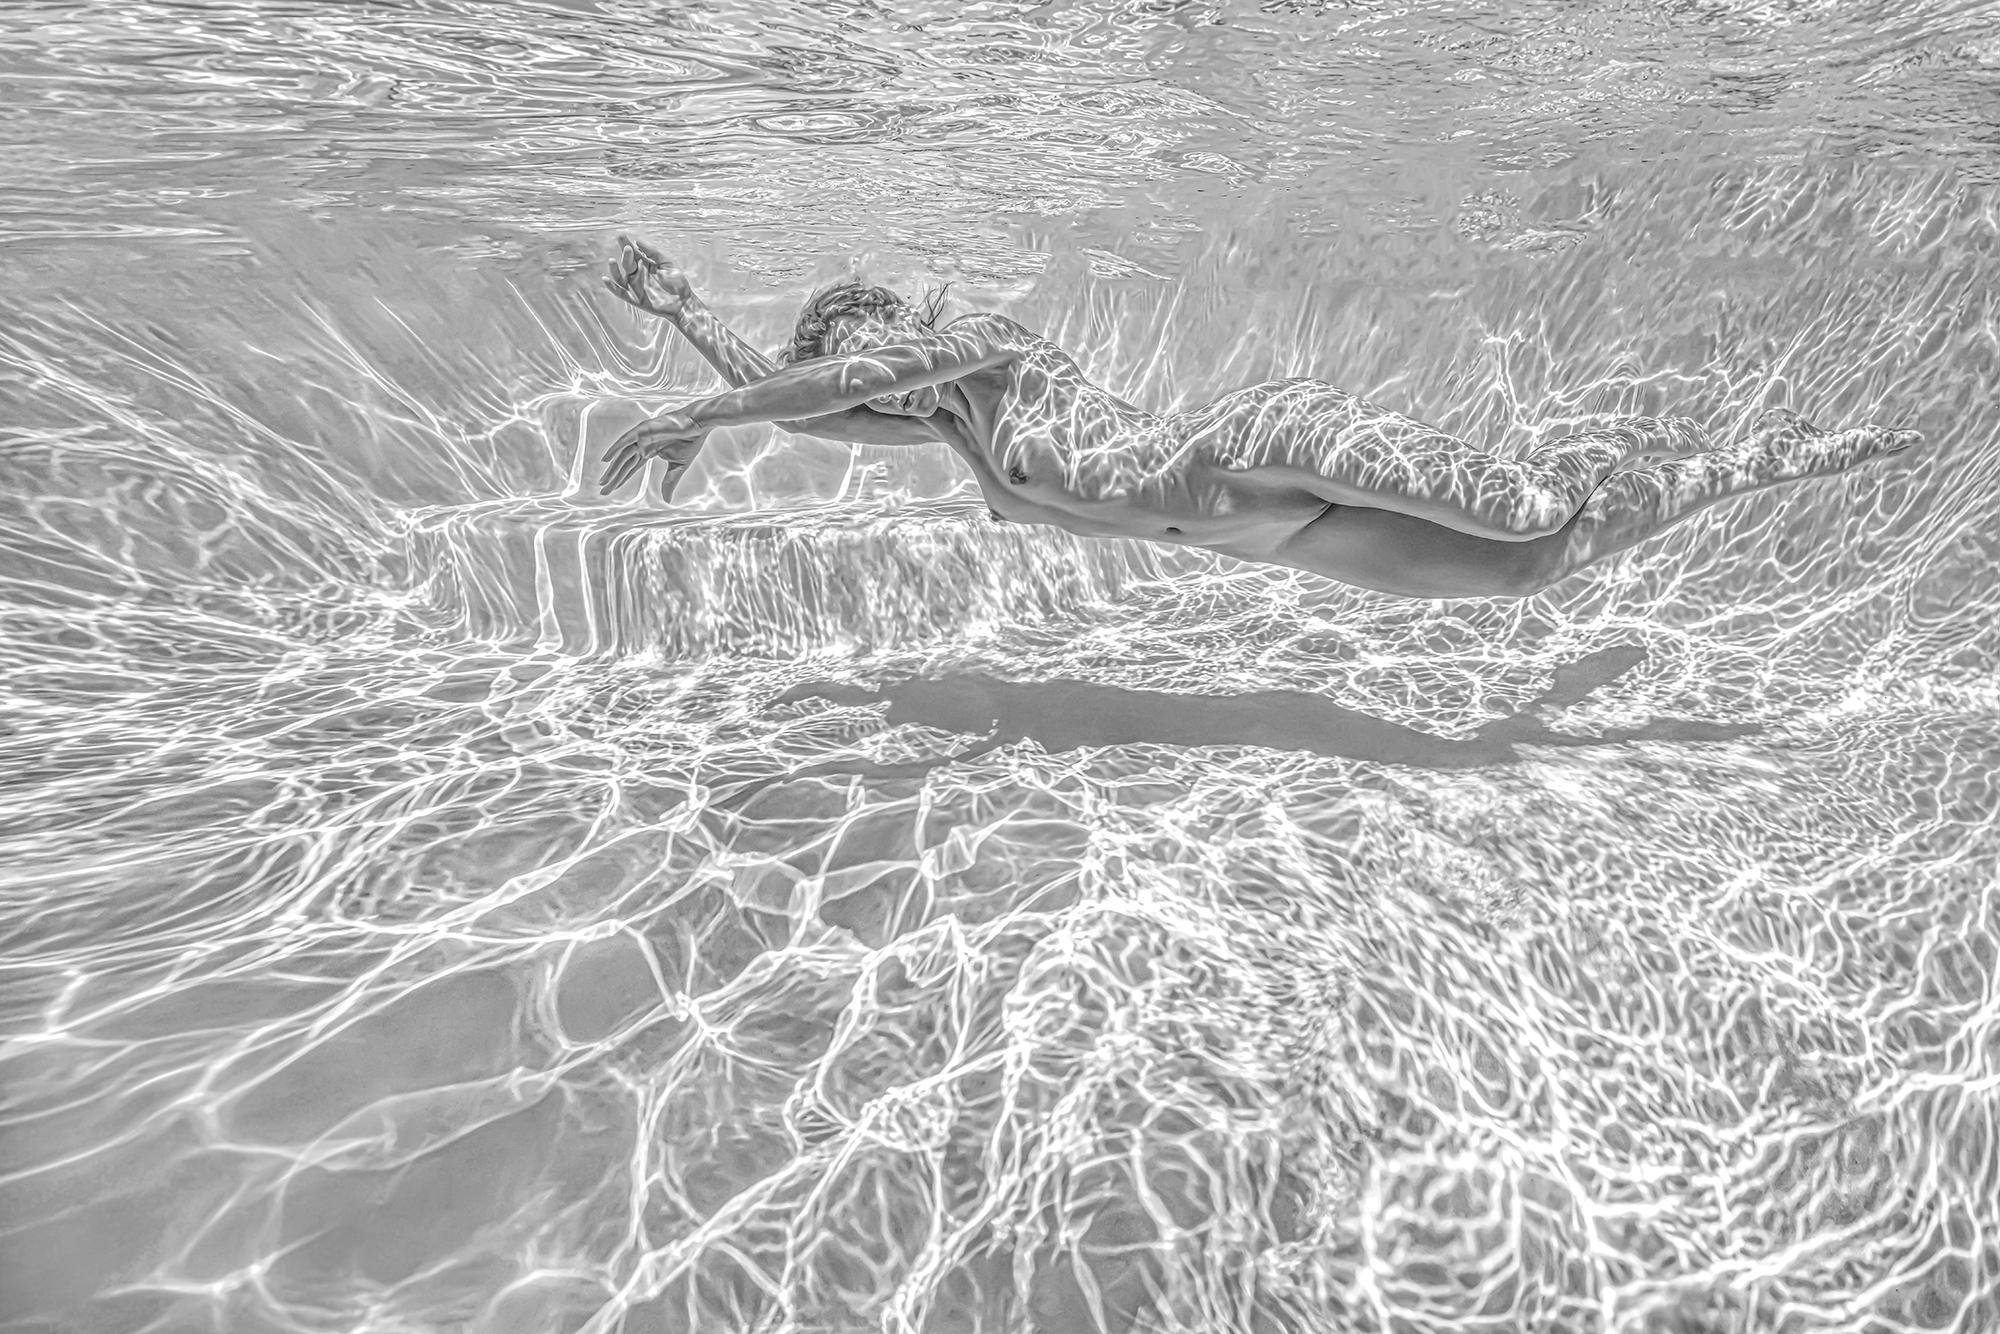 Alex Sher Nude Photograph - Thunderweb - underwater black & white nude photograph - print on aluminum 24x36"